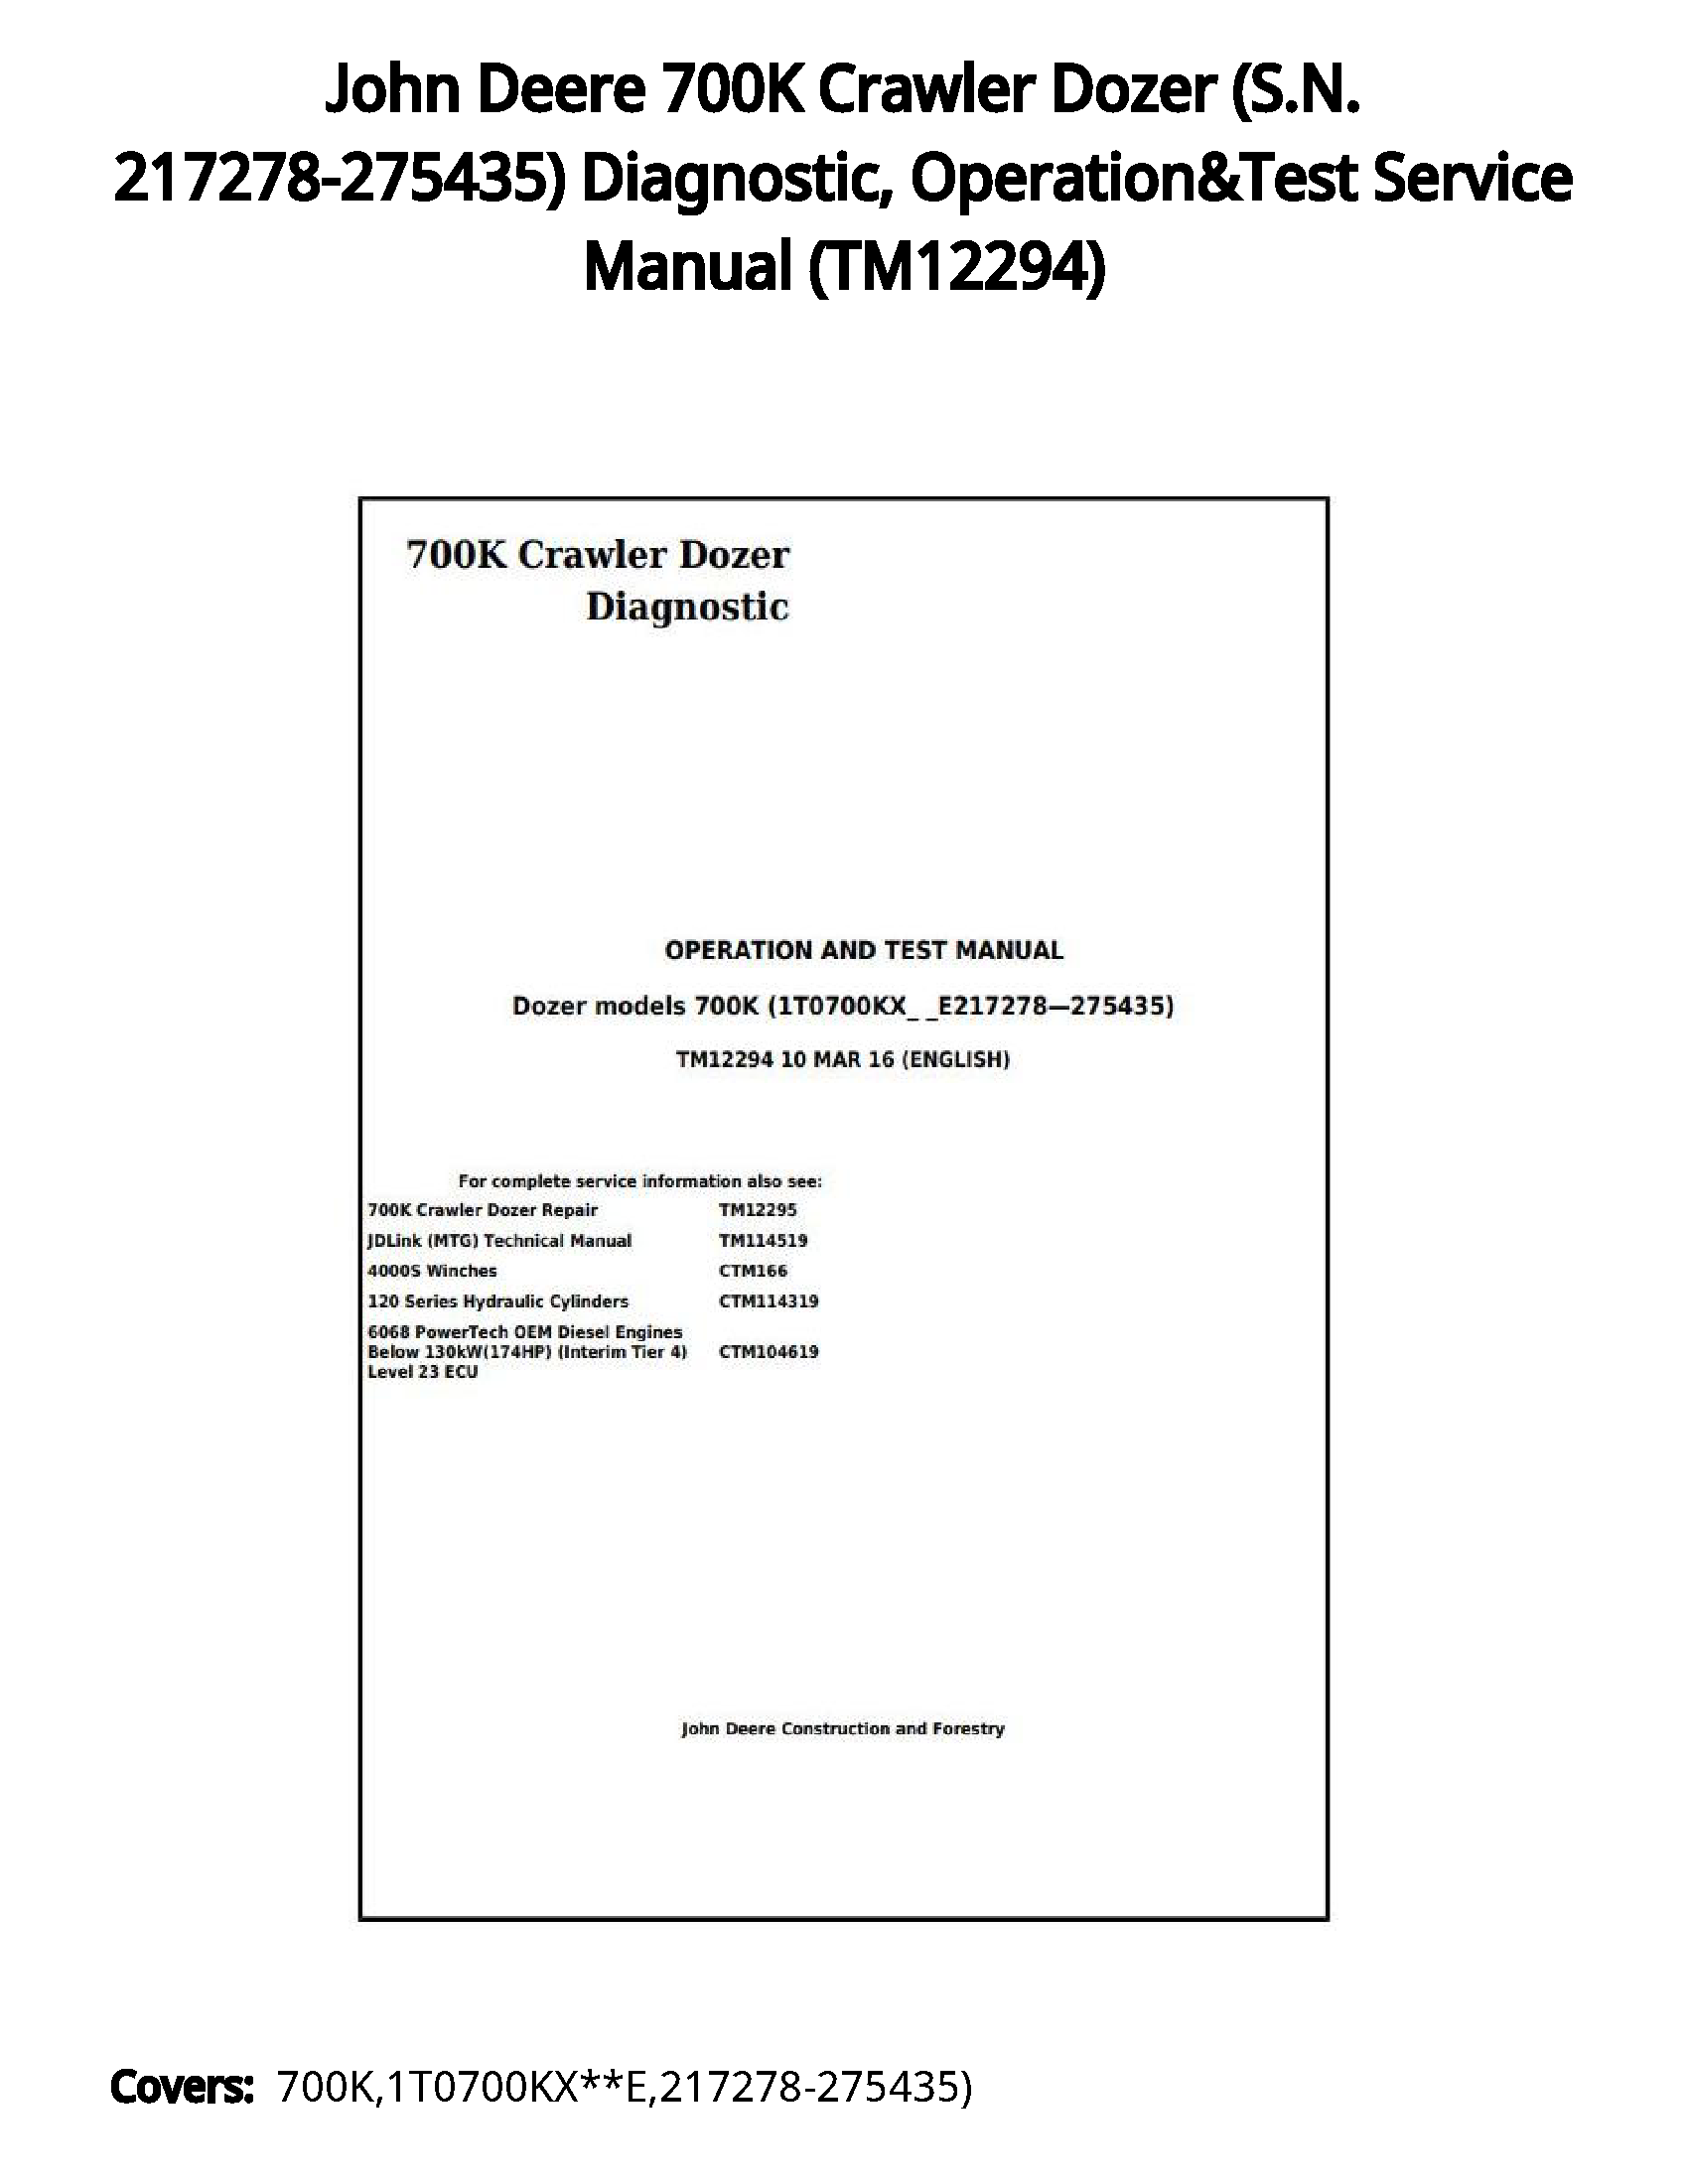 John Deere 700K Crawler Dozer (S.N. 217278-275435) Diagnostic  Operation&Test Service Manual - TM12294